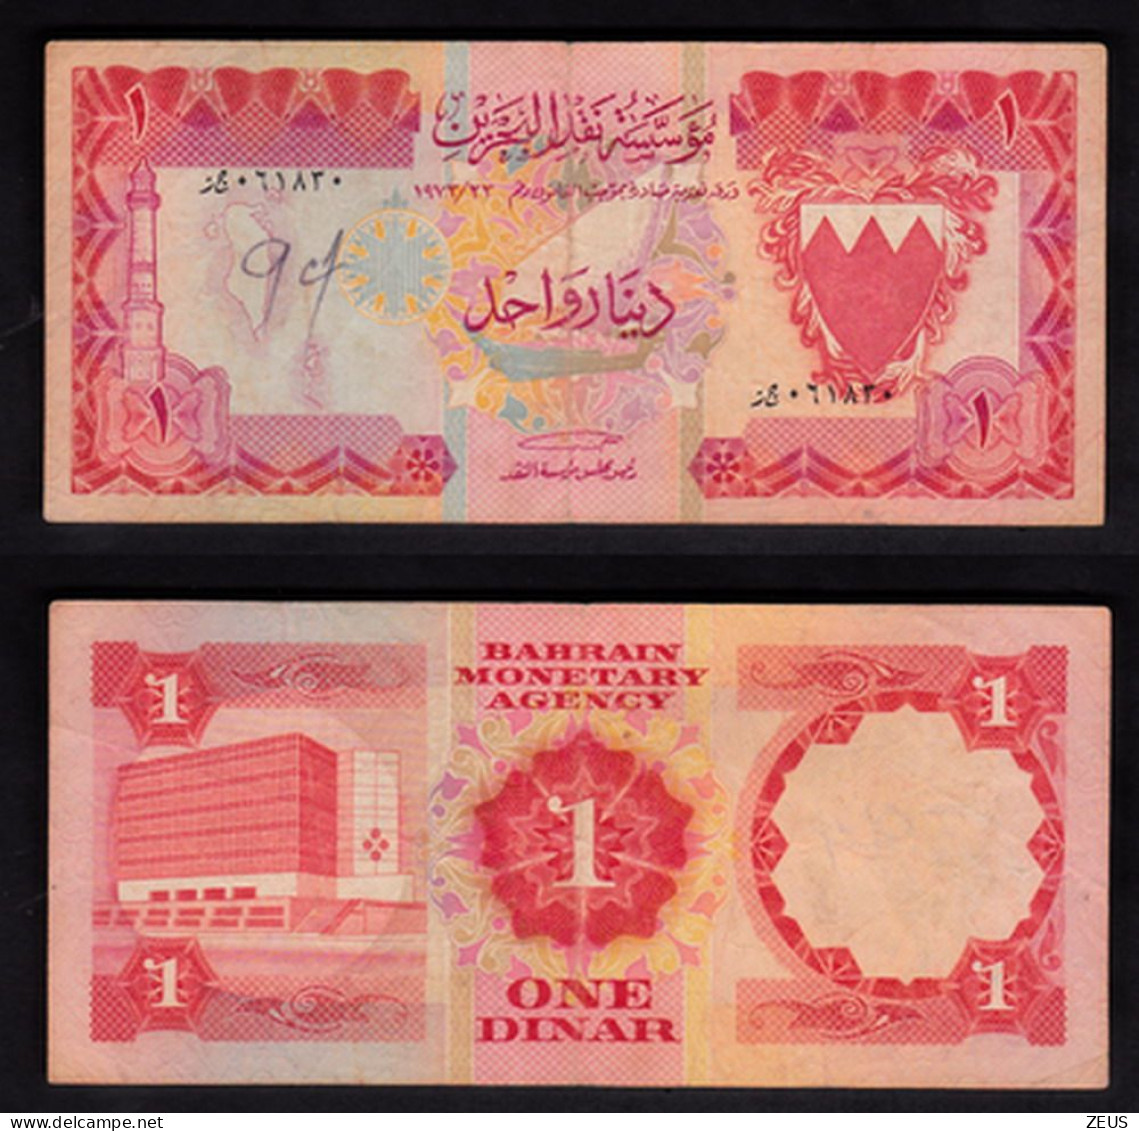 BAHREIN 1 DINARO 1973 PIK 8 - Bahrain